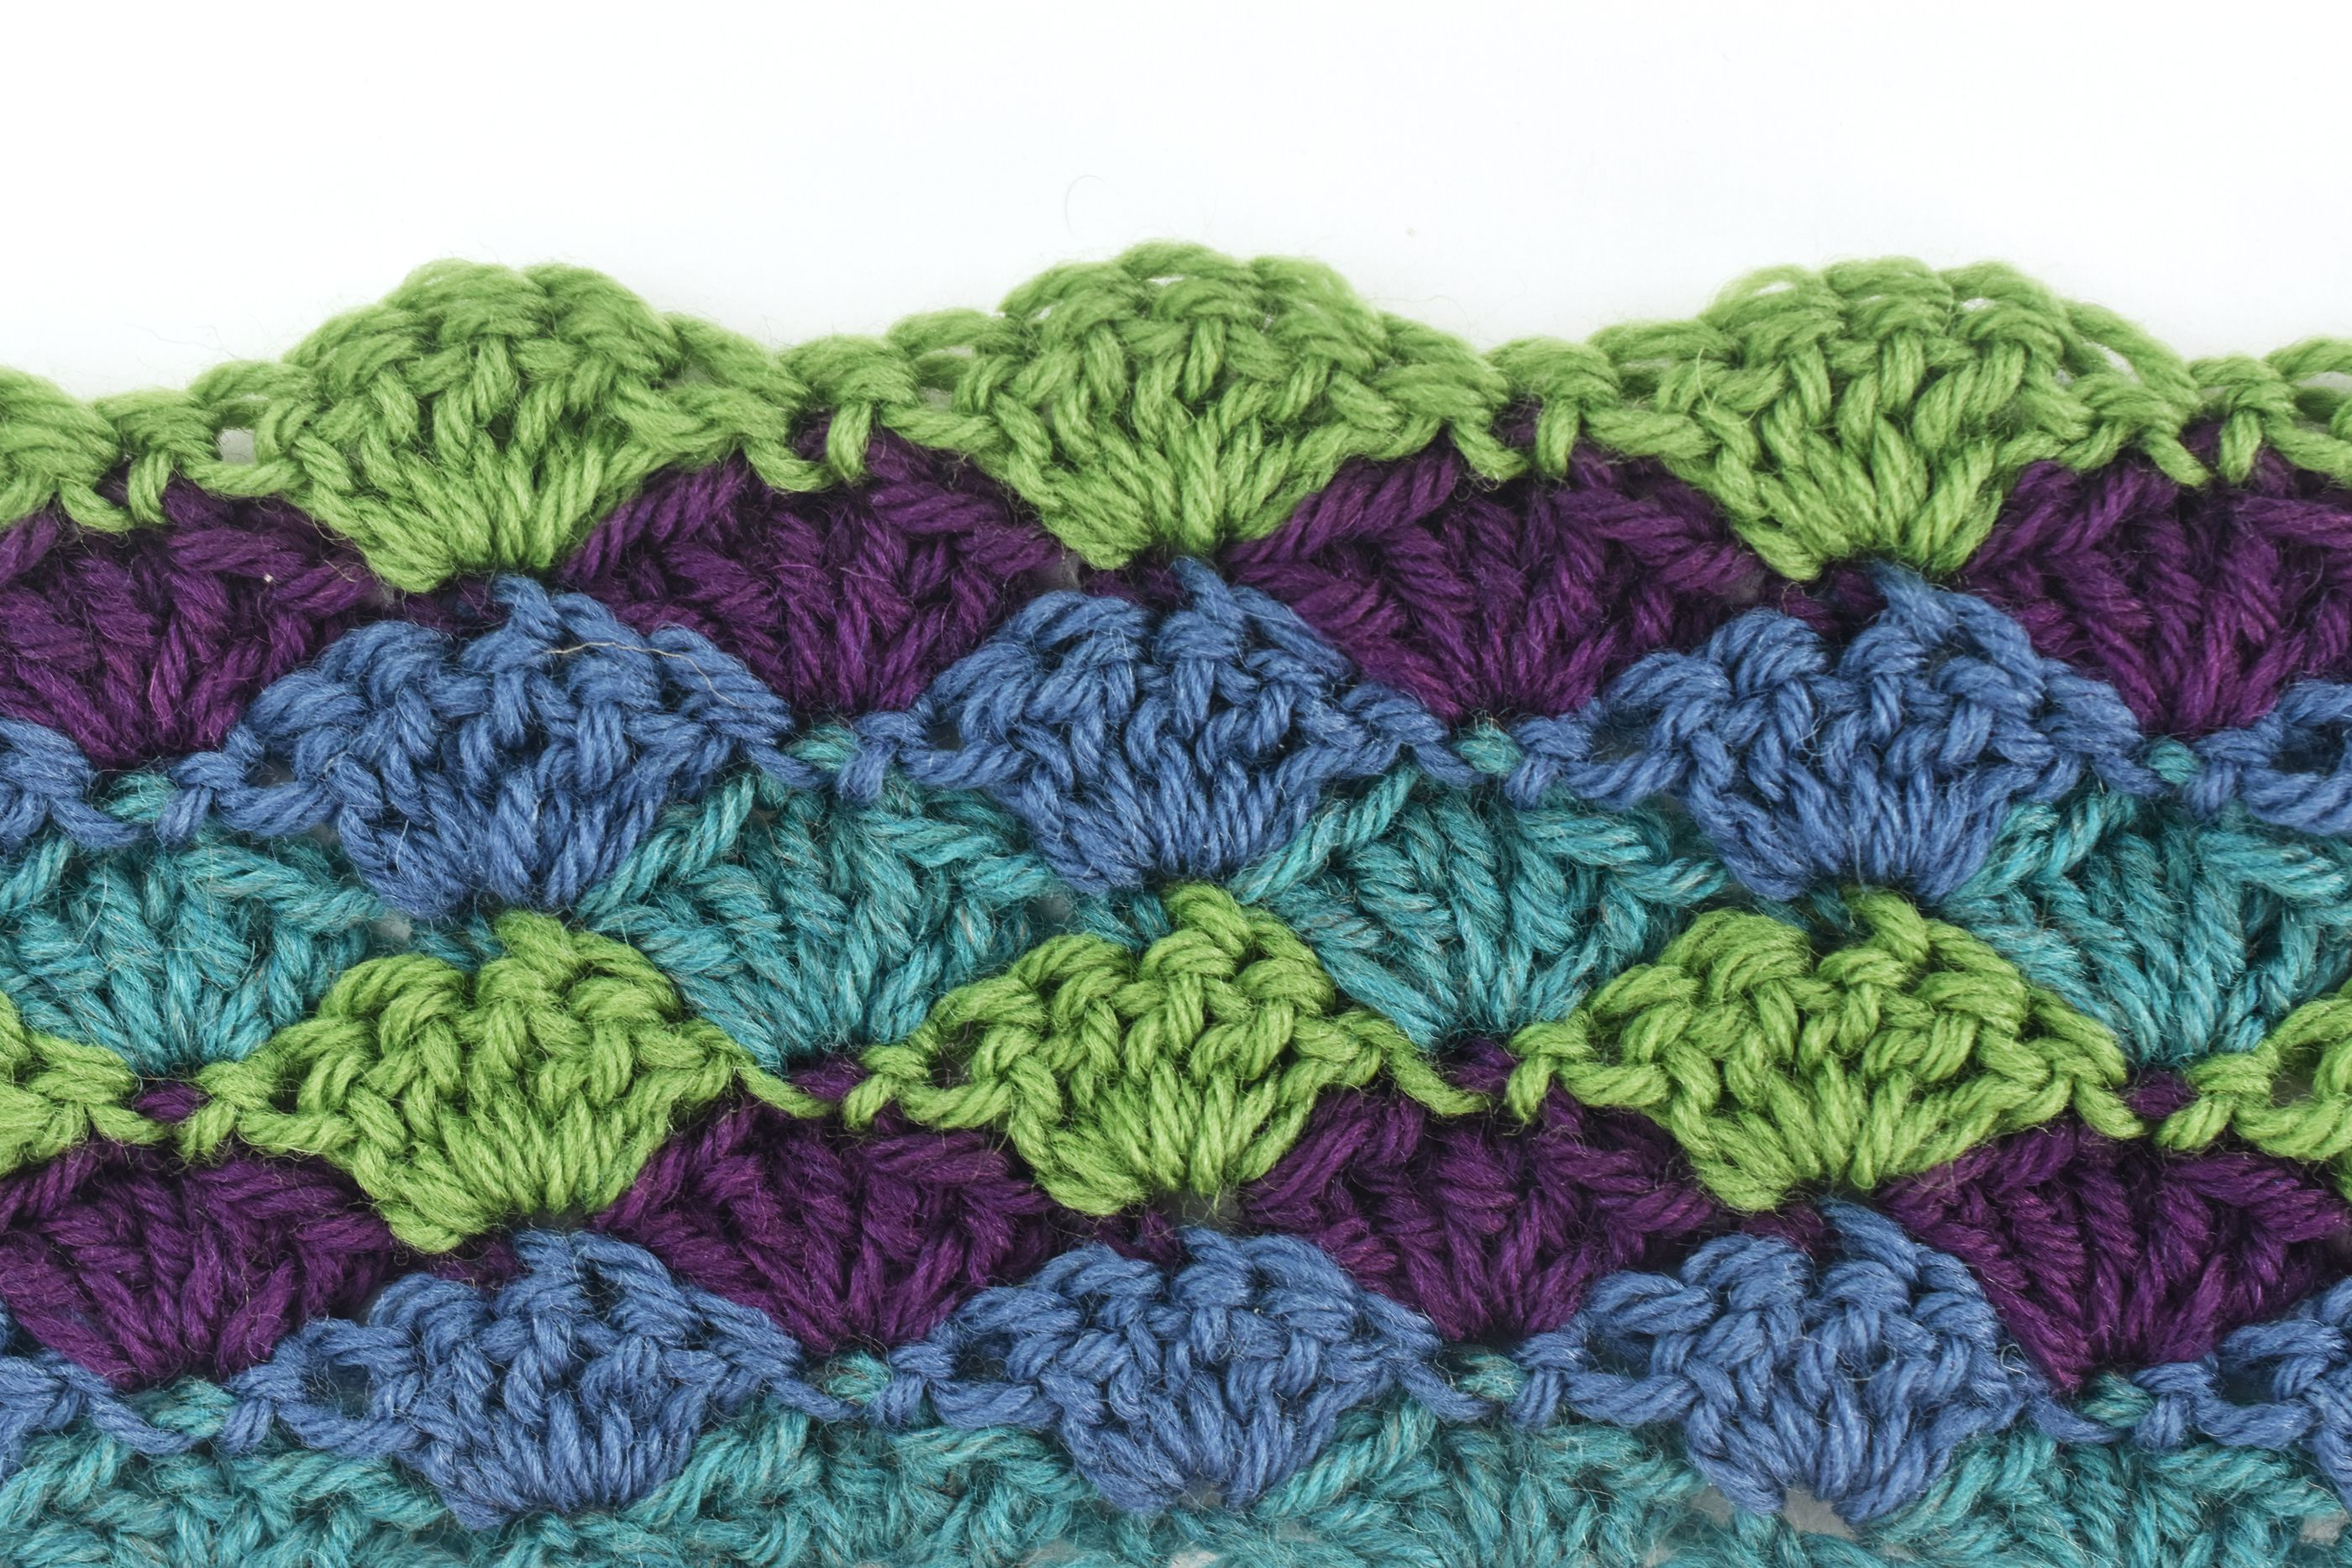 Crochet Shell Pattern Scarf How To Crochet Shell Stitch